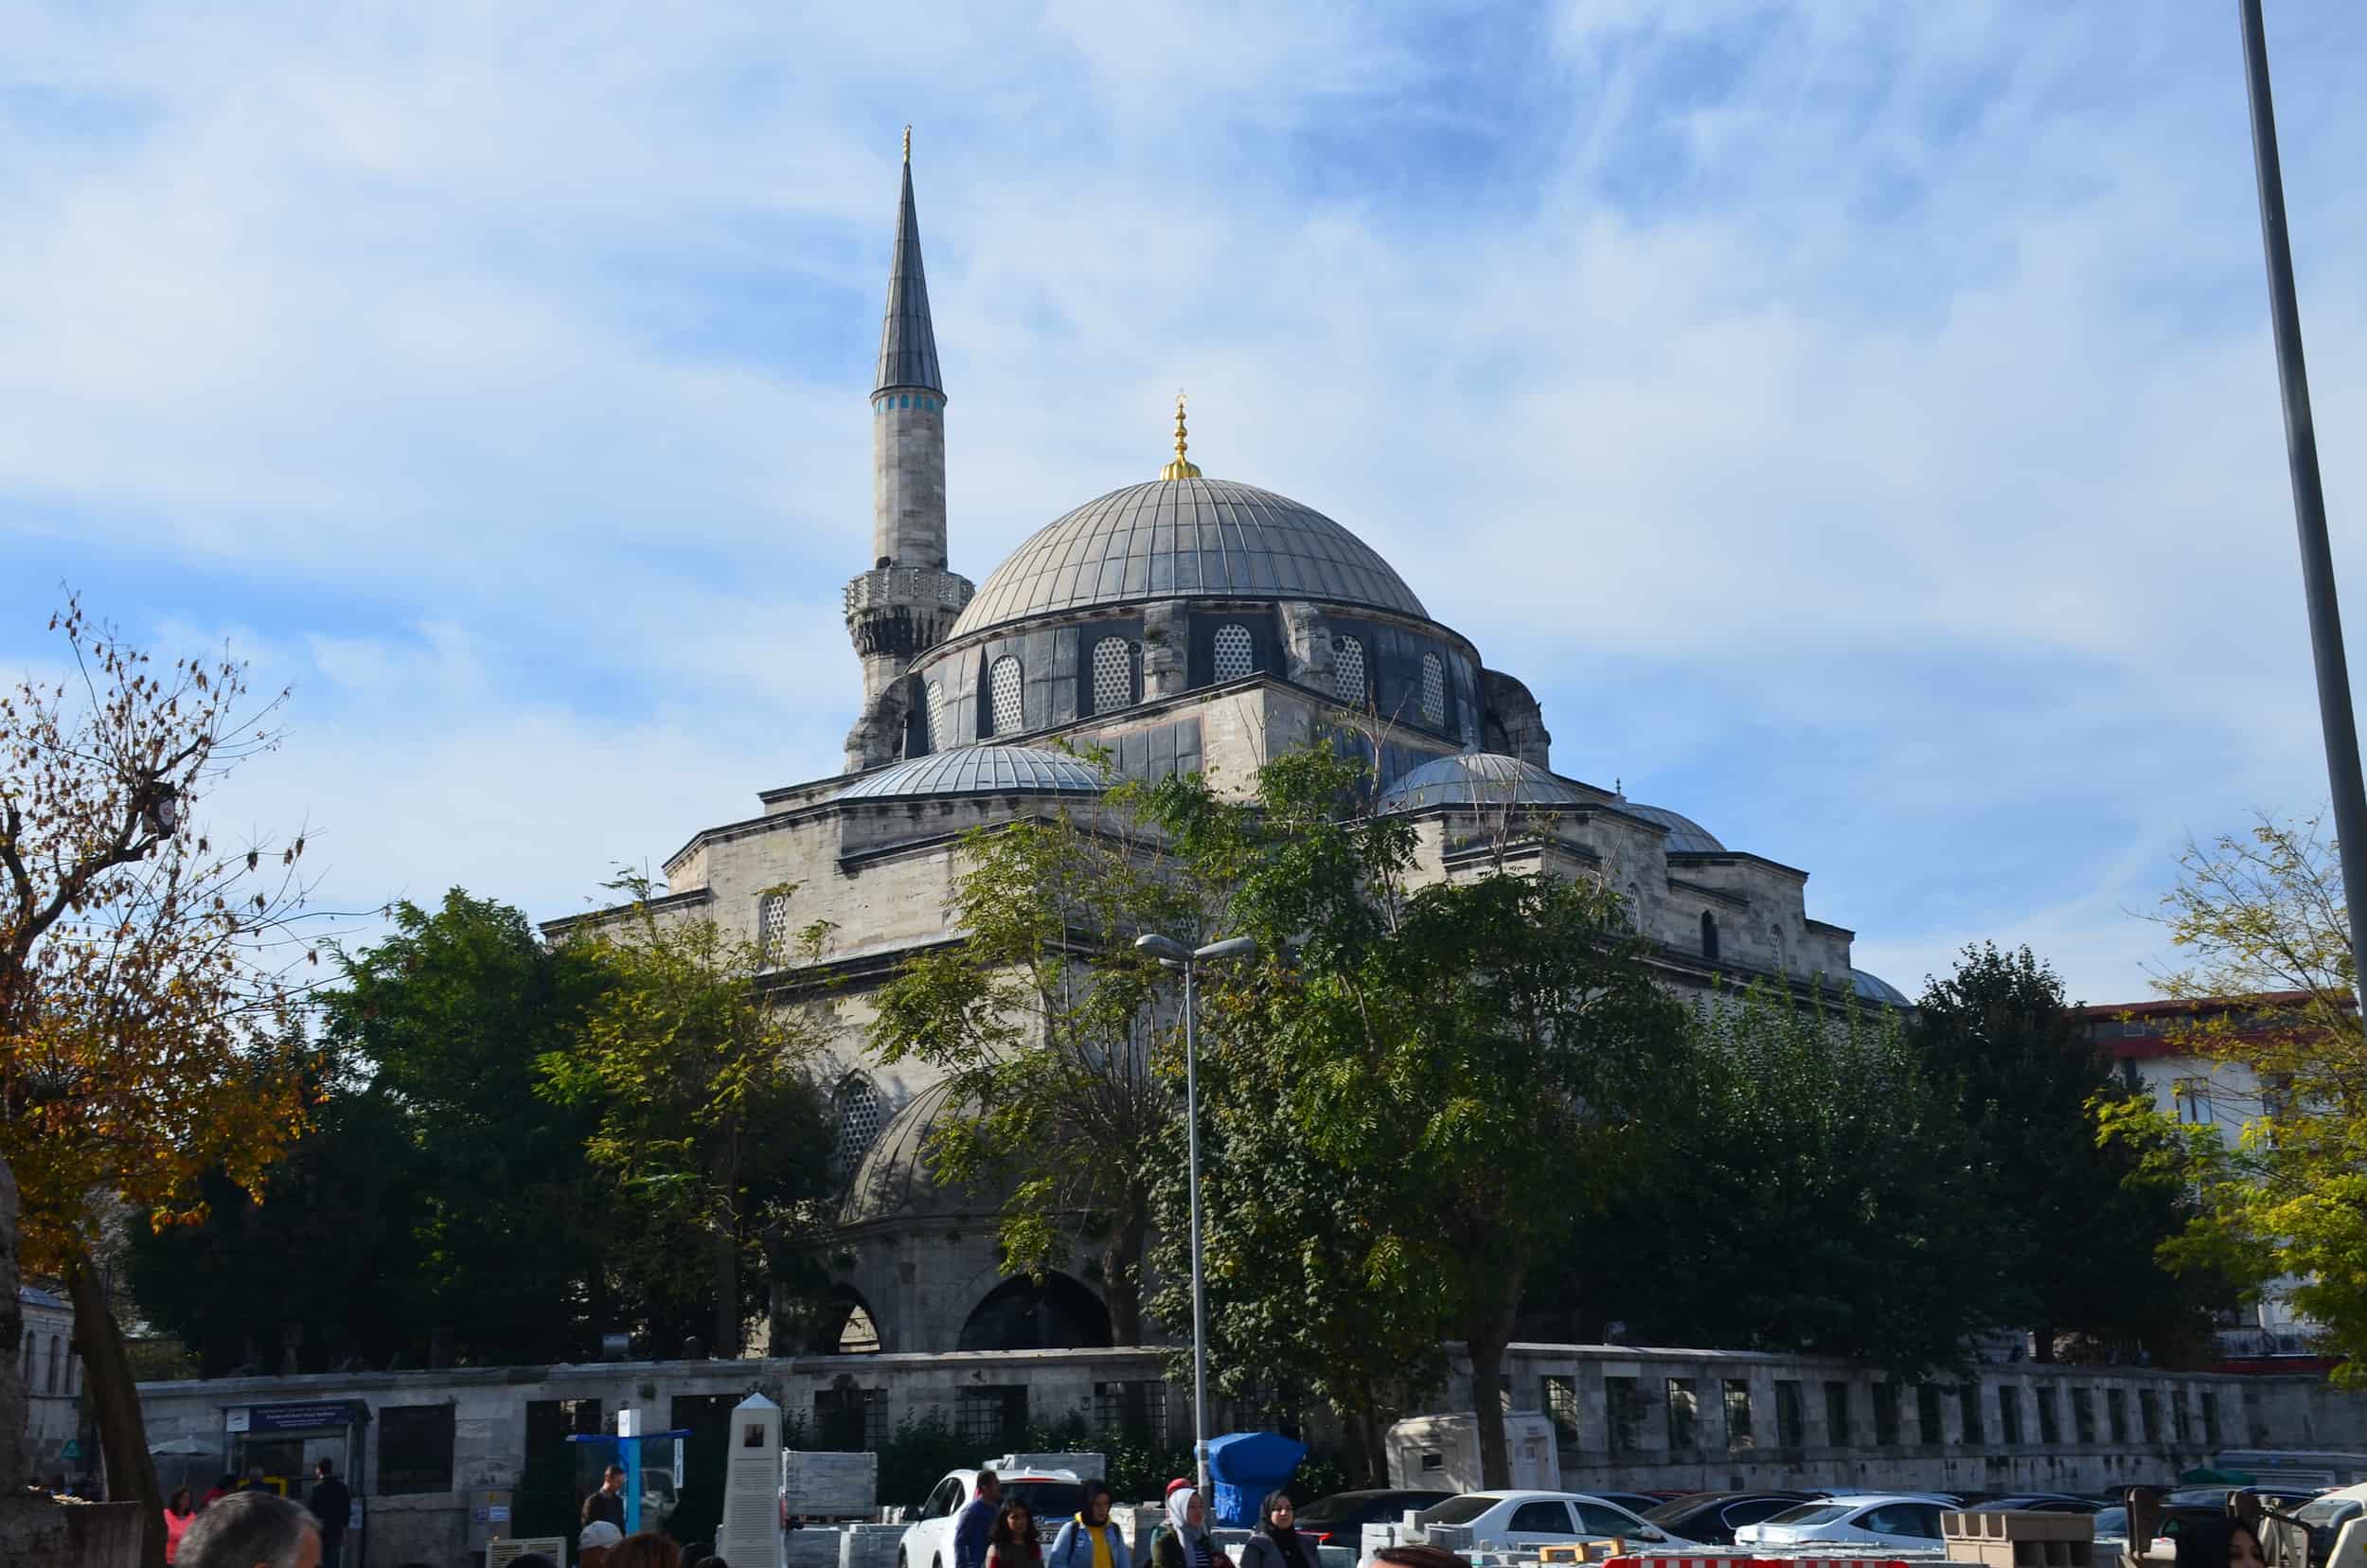 Atik Ali Pasha Mosque in Çemberlitaş, Istanbul, Turkey